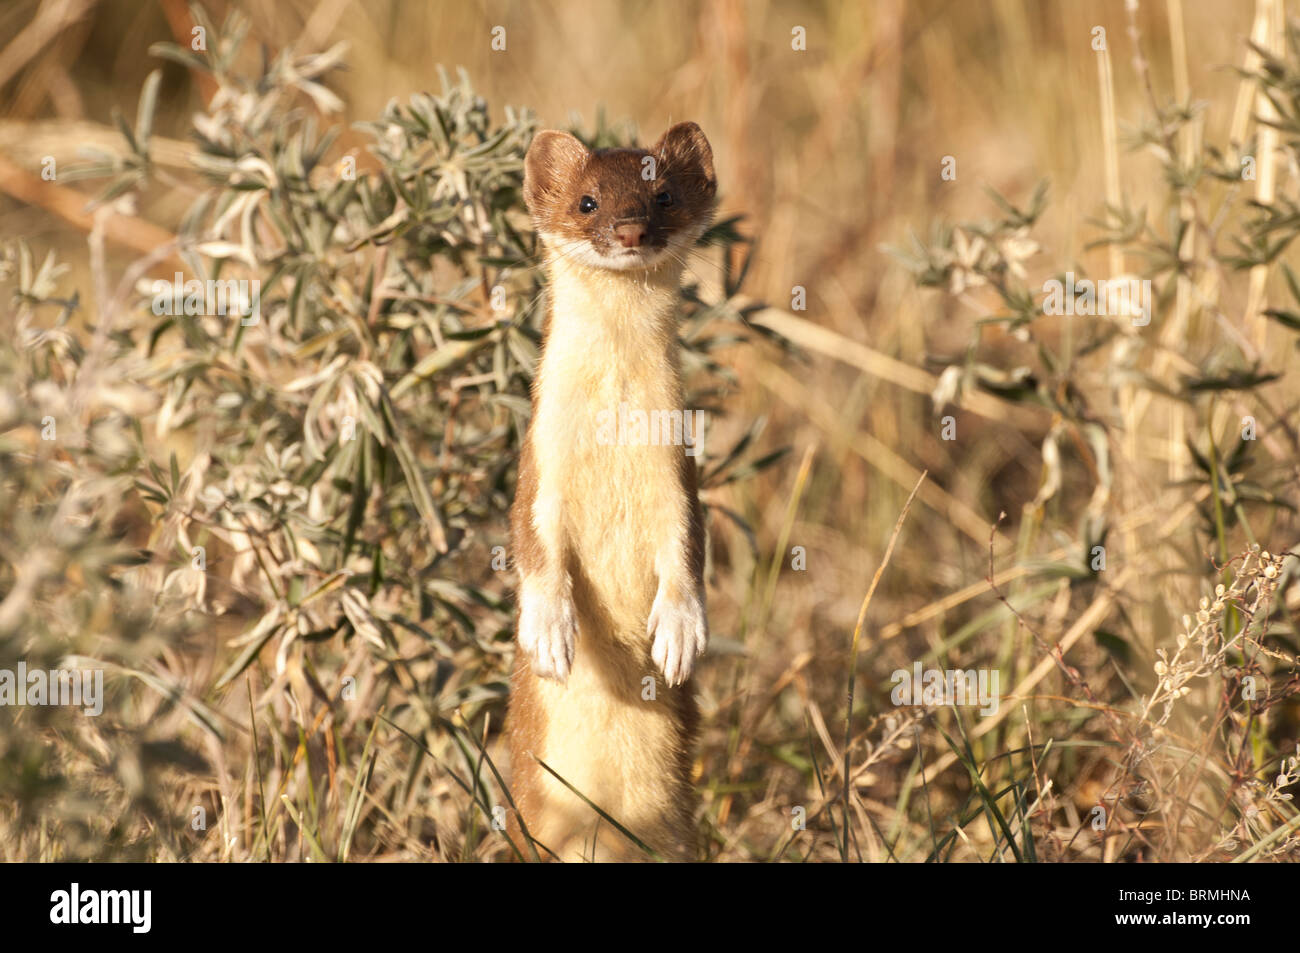 Stock photo of a long-tailed weasel (Mustela frenata) standing in sagebrush habitat, Grand Teton National Park, Wyoming Stock Photo